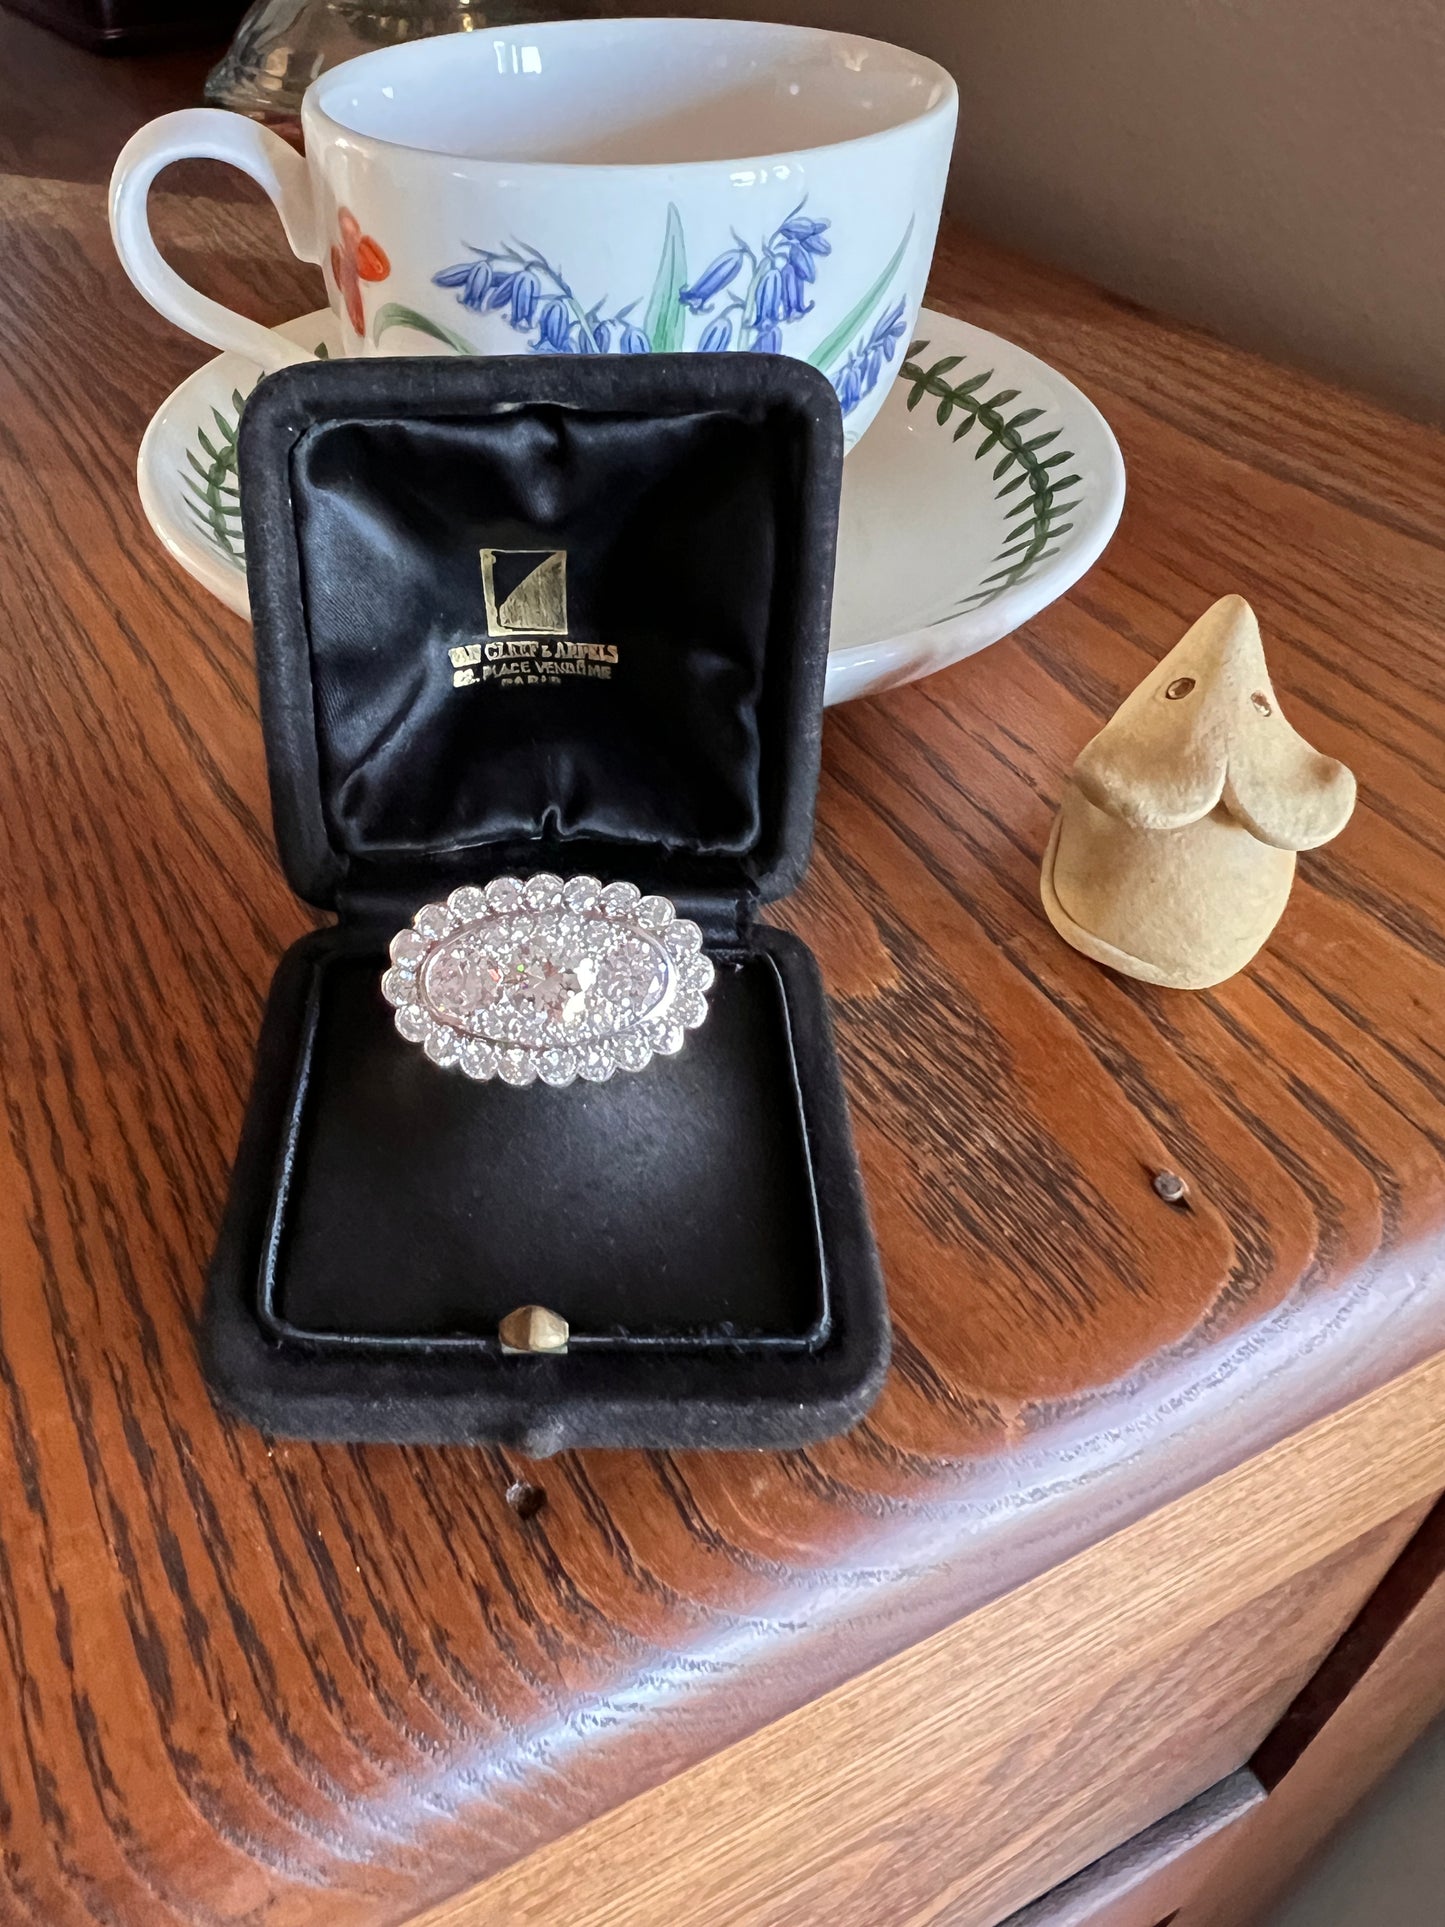 Vintage VAN CLEEF & ARPELS Boxed 5.25 Carat Transitional Cut Diamond Ring Heavy 22g 18k Gold Platinum Vtg to Antique Art Deco Special in Original Box